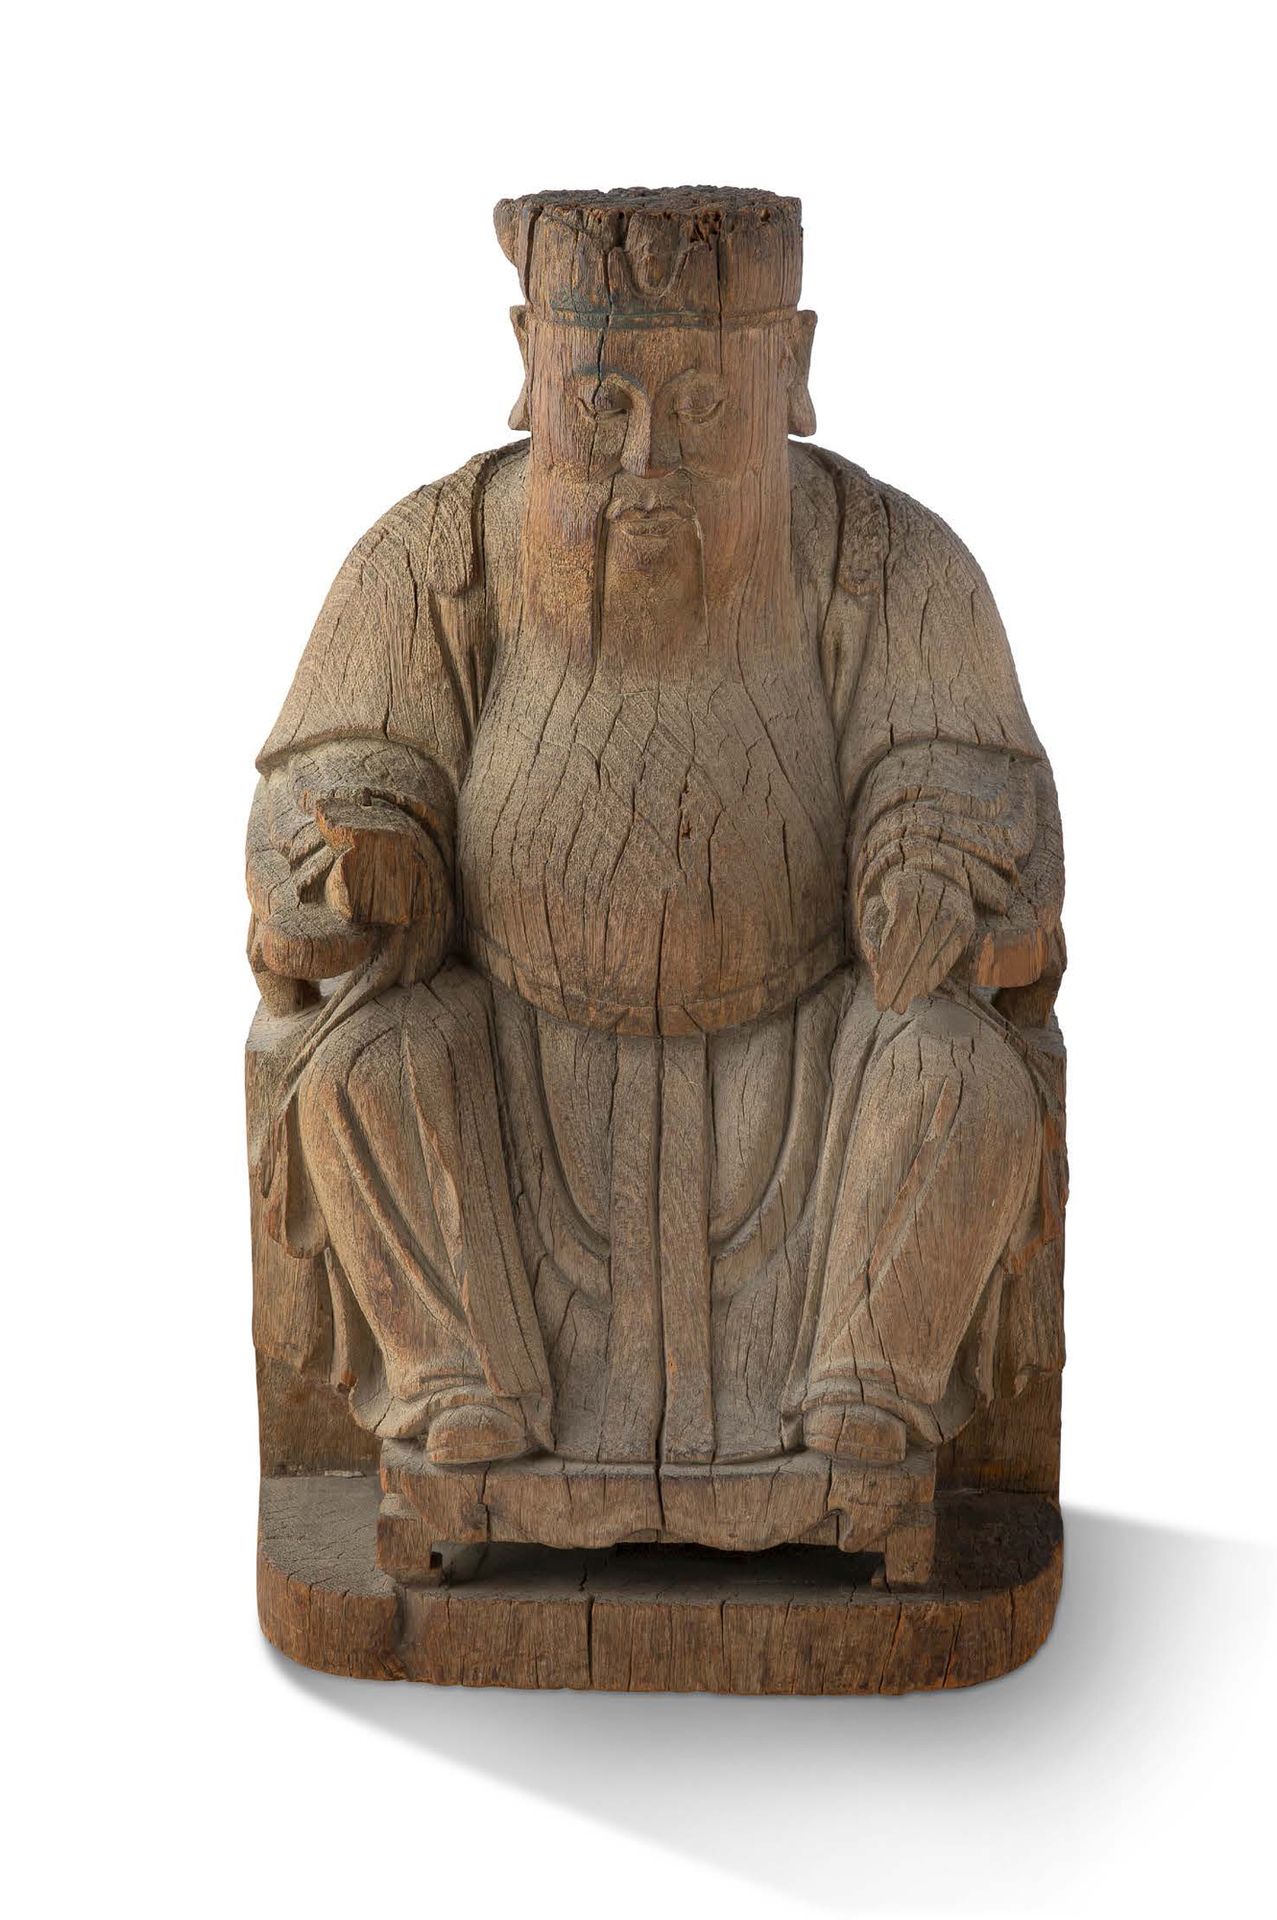 CHINE DYNASTIE QING, XIXe SIÈCLE Imponente estatua tallada en madera que represe&hellip;